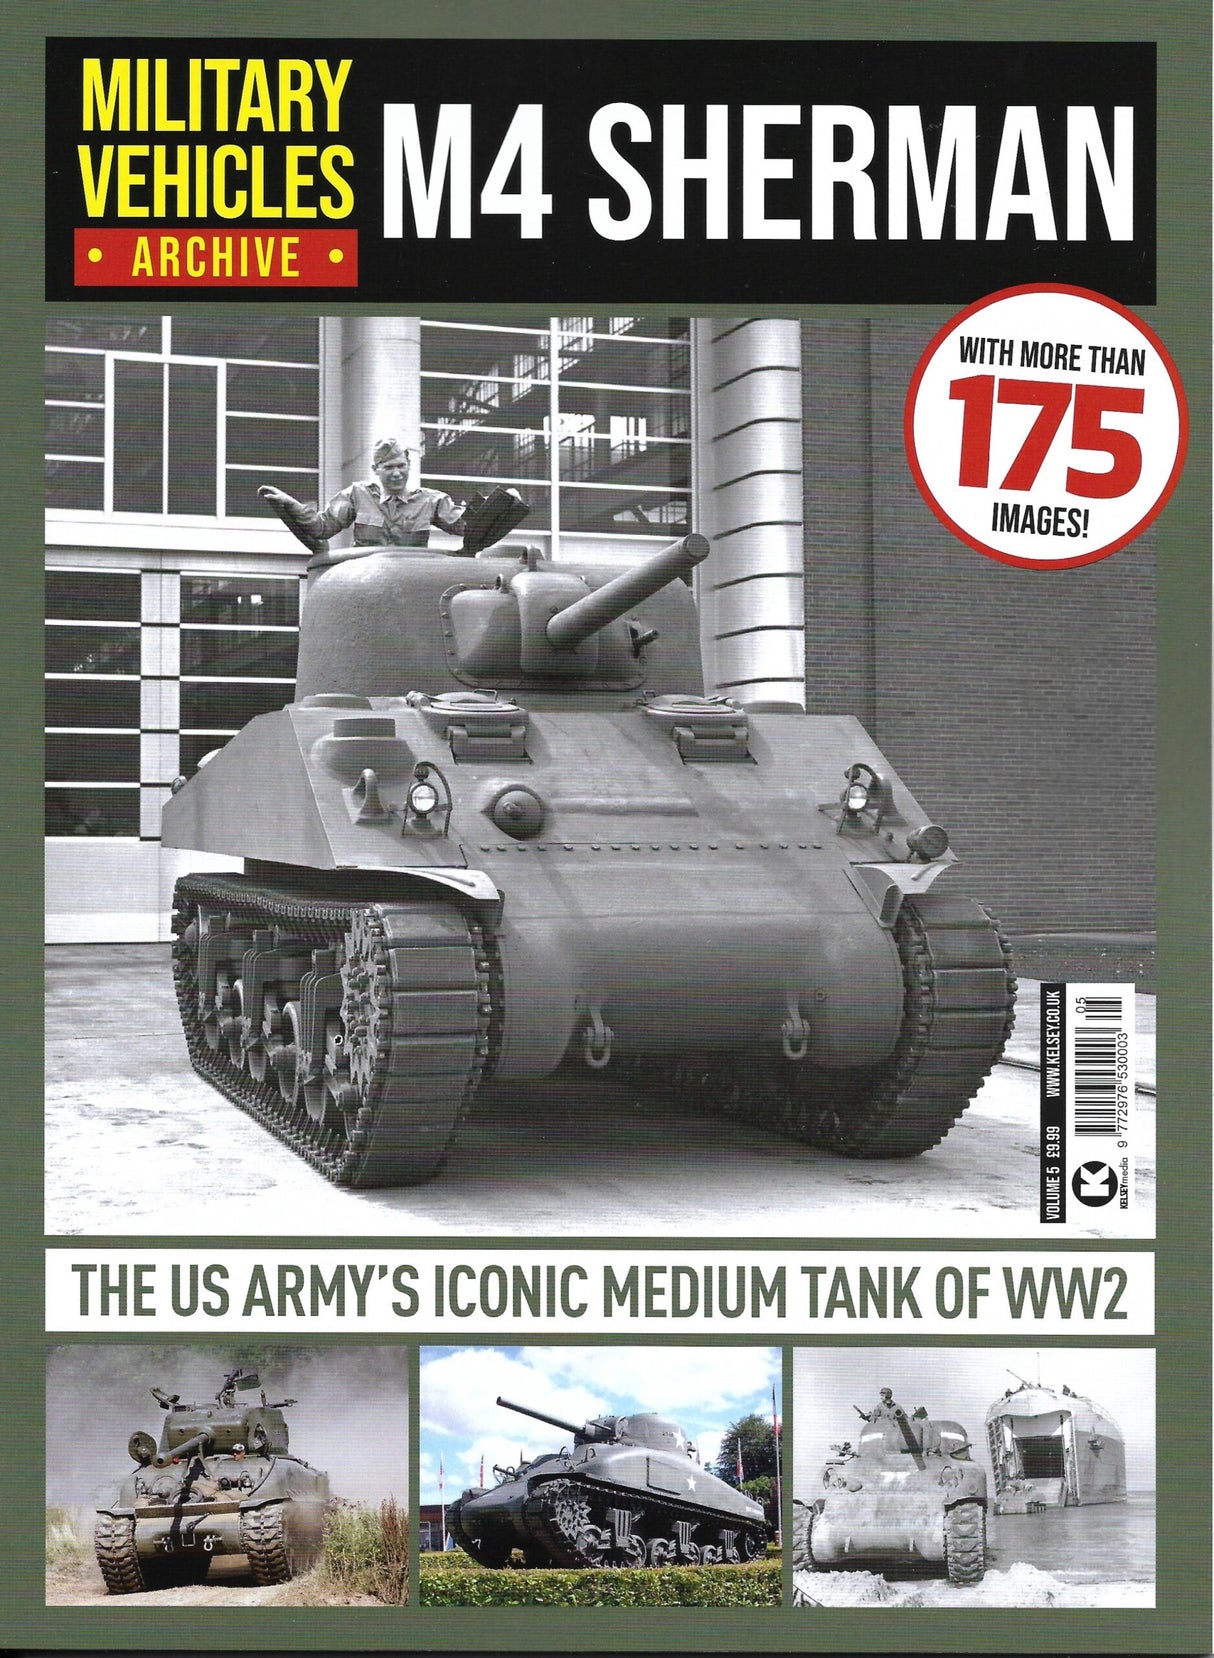 Military Trucks Archive: M4 Sherman